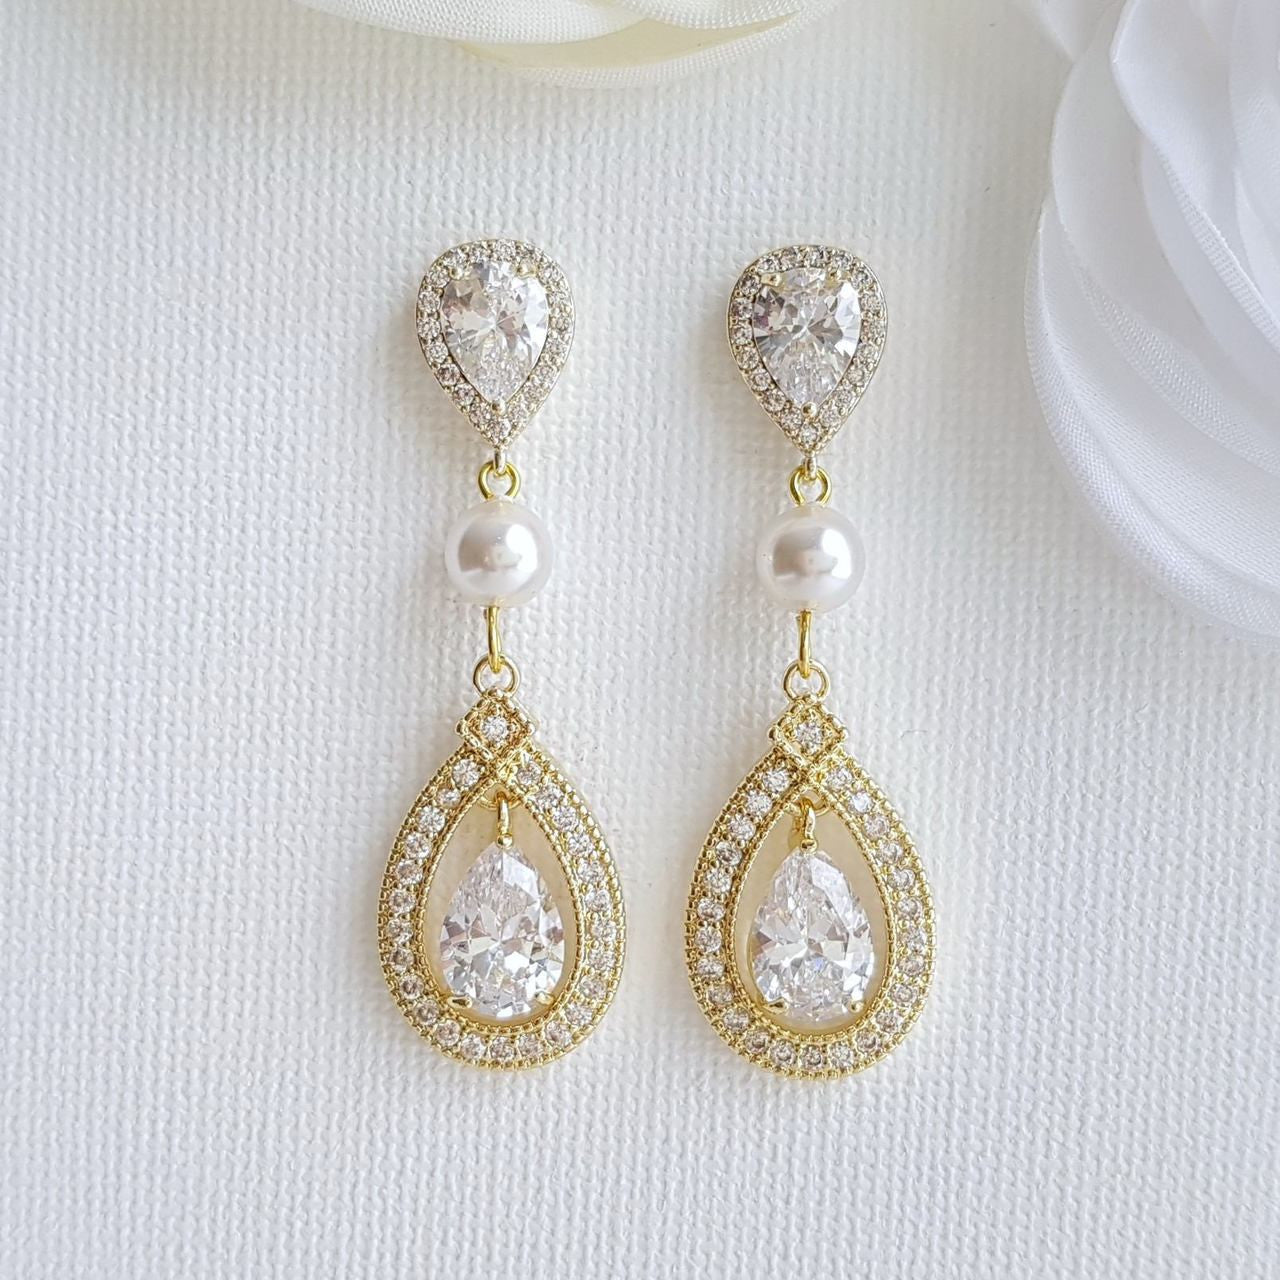 Crystal CLIP ON Wedding Earrings Bridal Earrings Cubic Zirconia  Pearl Rose Gold Halo Style Drop Earrings Bridal Jewelry, Sarah